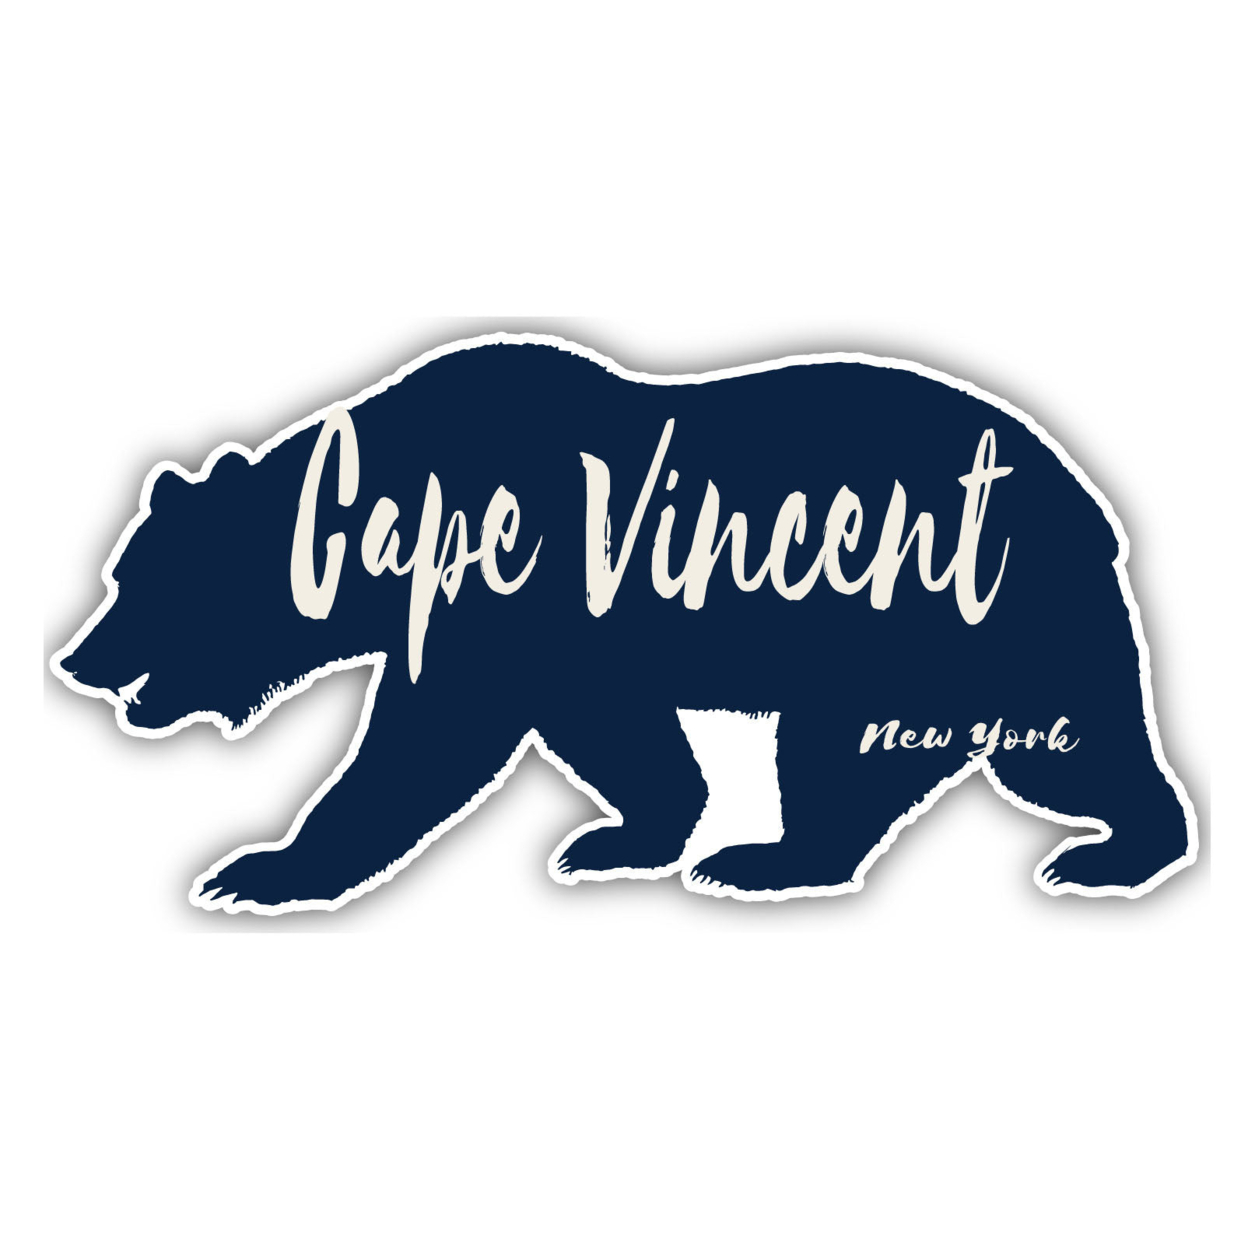 Cape Vincent New York Souvenir Decorative Stickers (Choose Theme And Size) - 4-Pack, 8-Inch, Bear